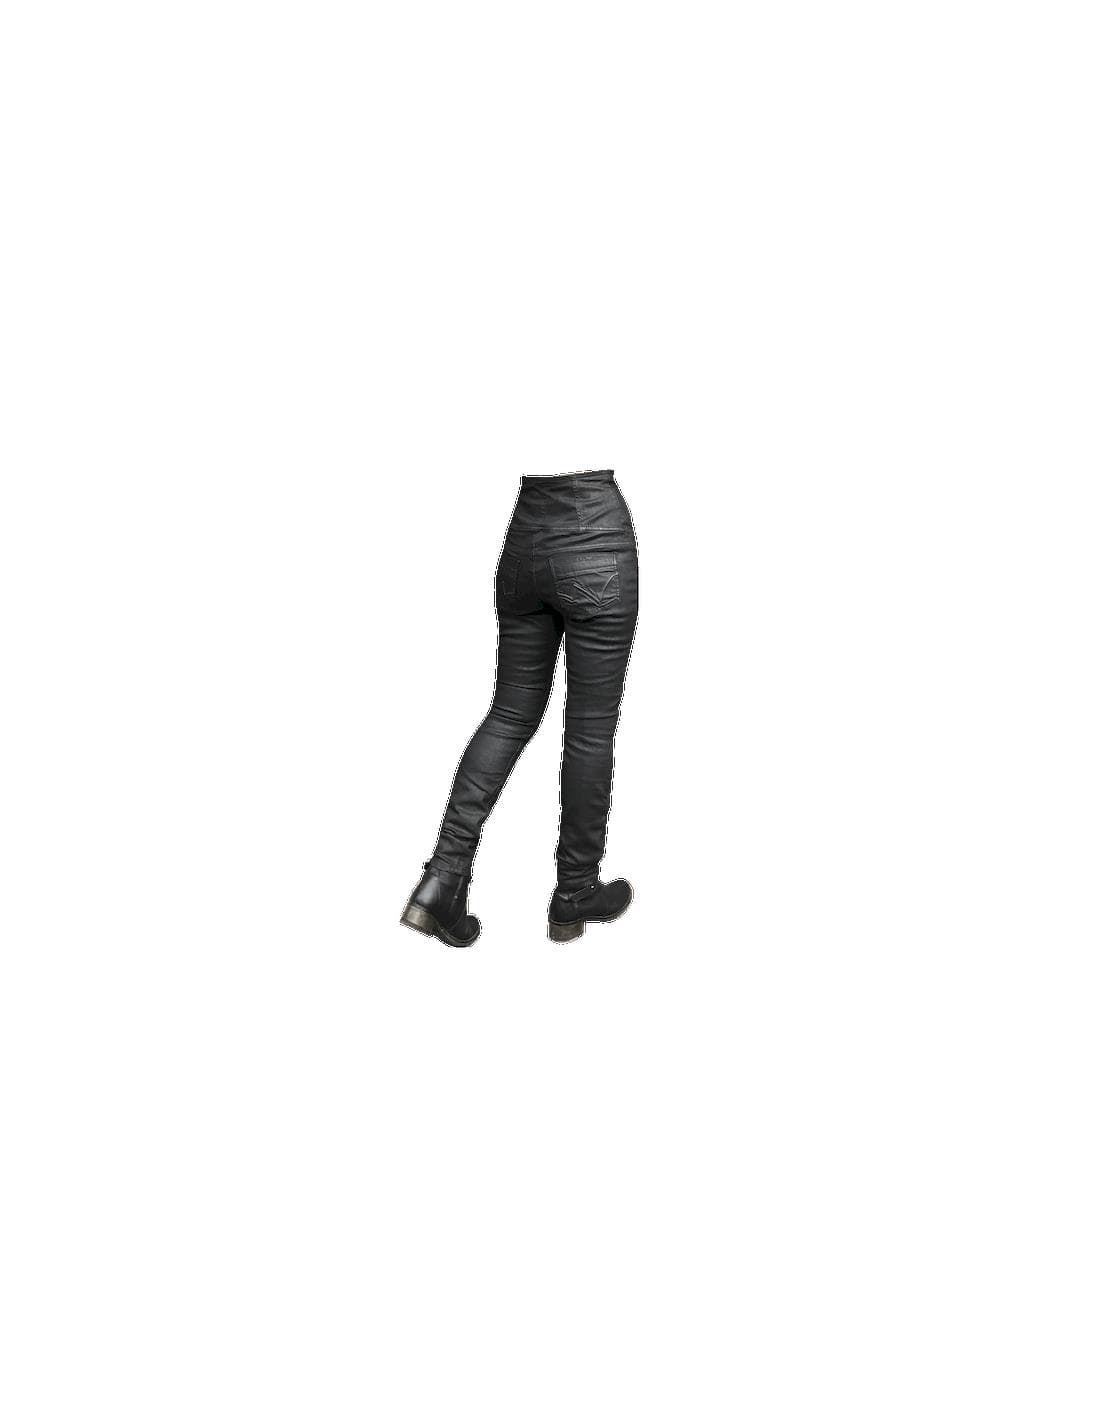 Jeans Overlap Evy Night chica - Imagen 2